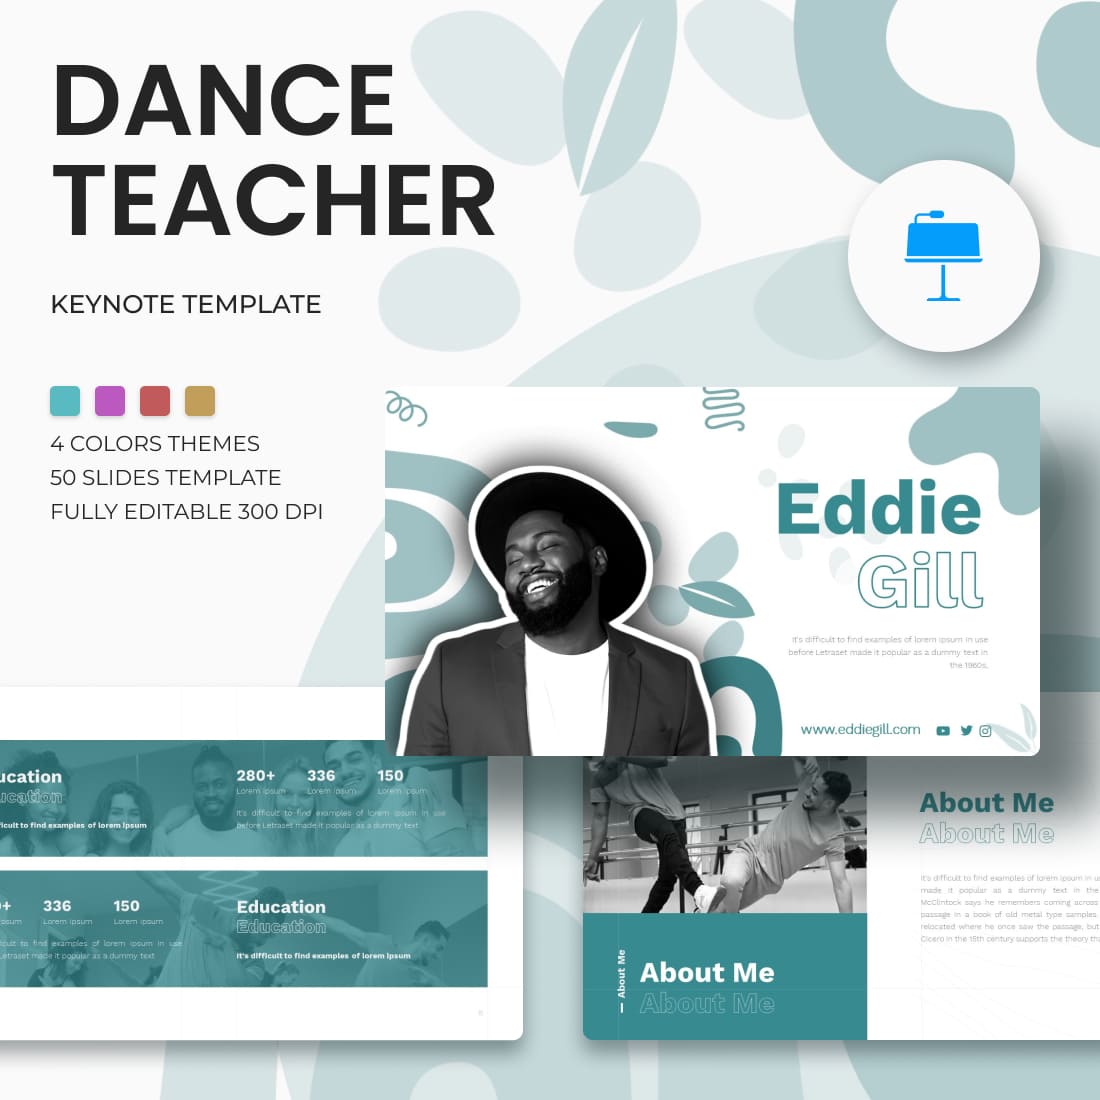 Dance Teacher Keynote Template cover.